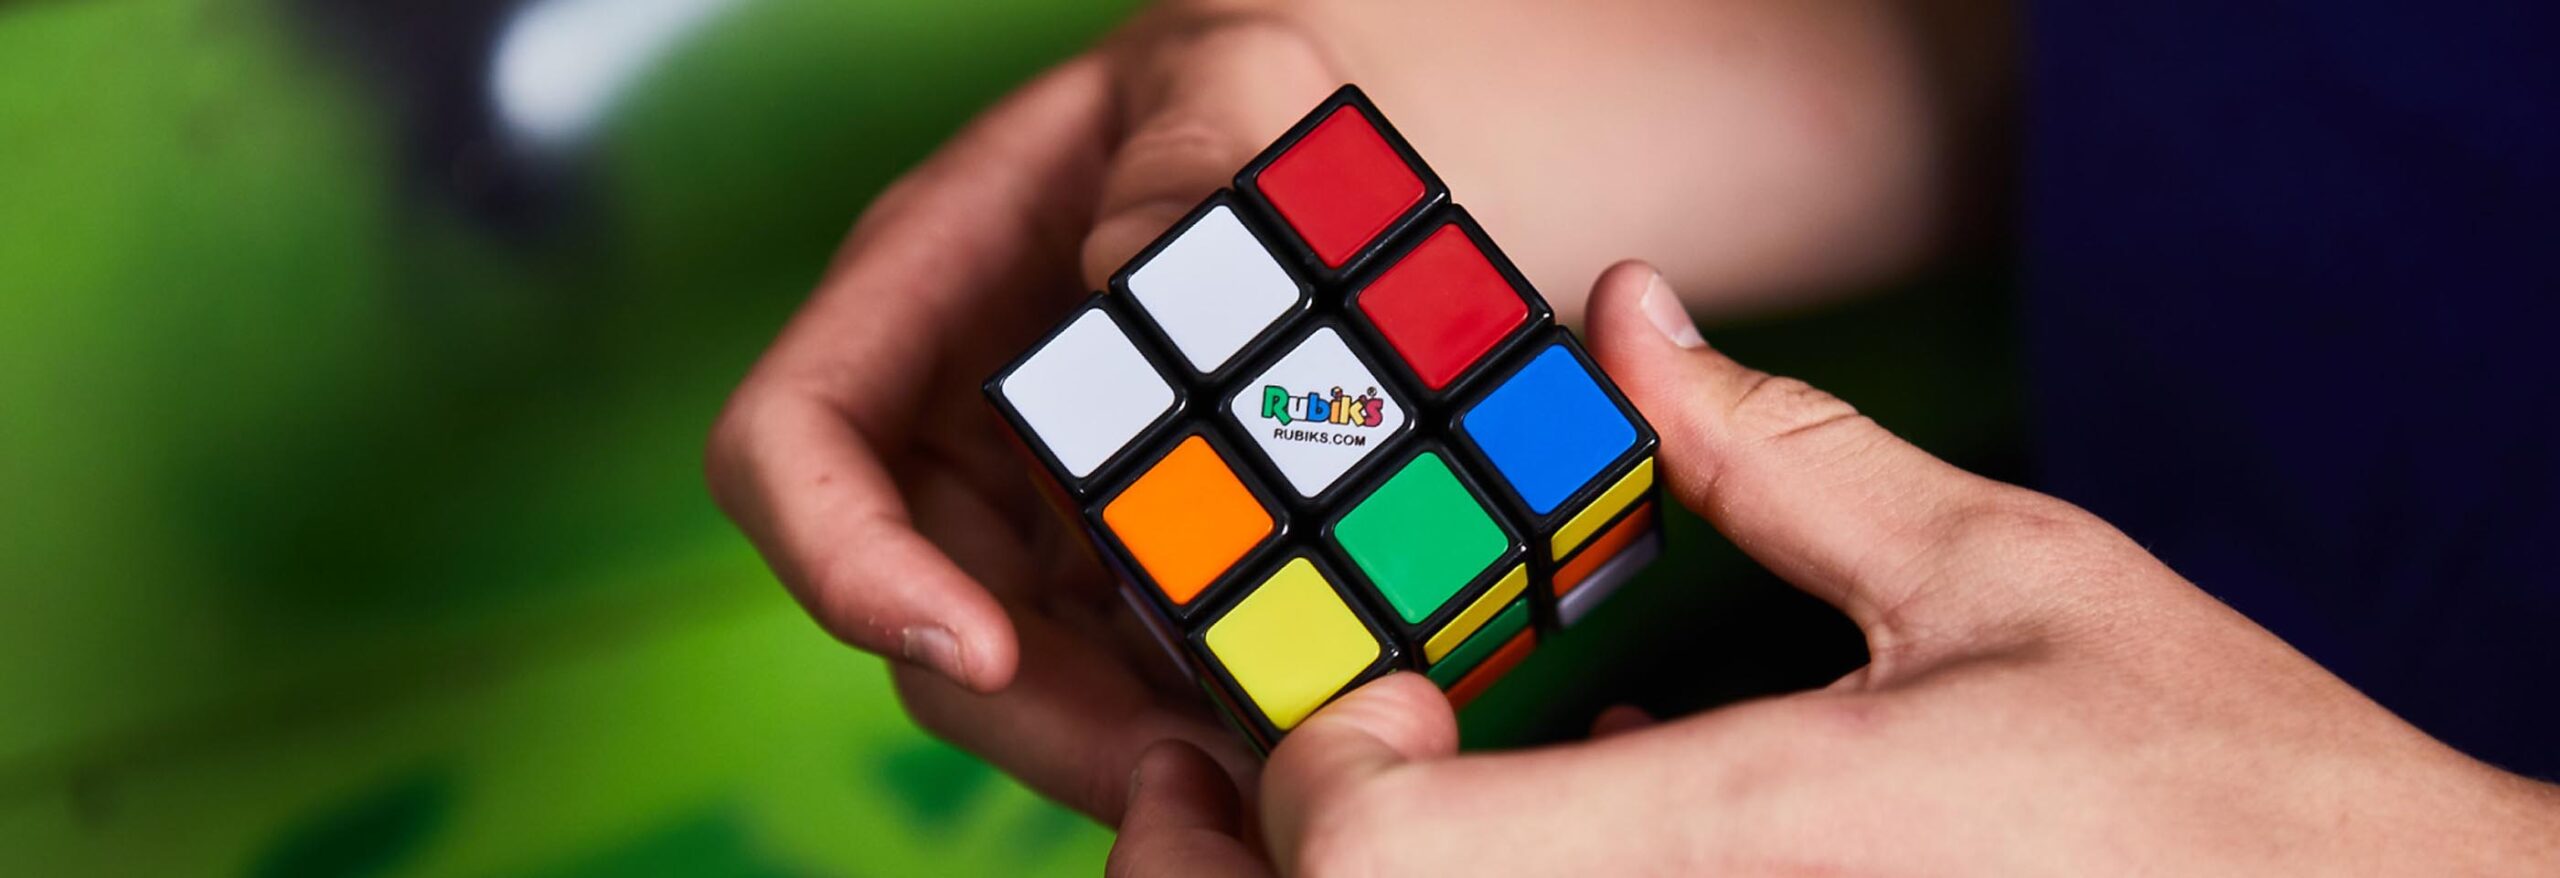 Rubik's Race – Game Centre Nz